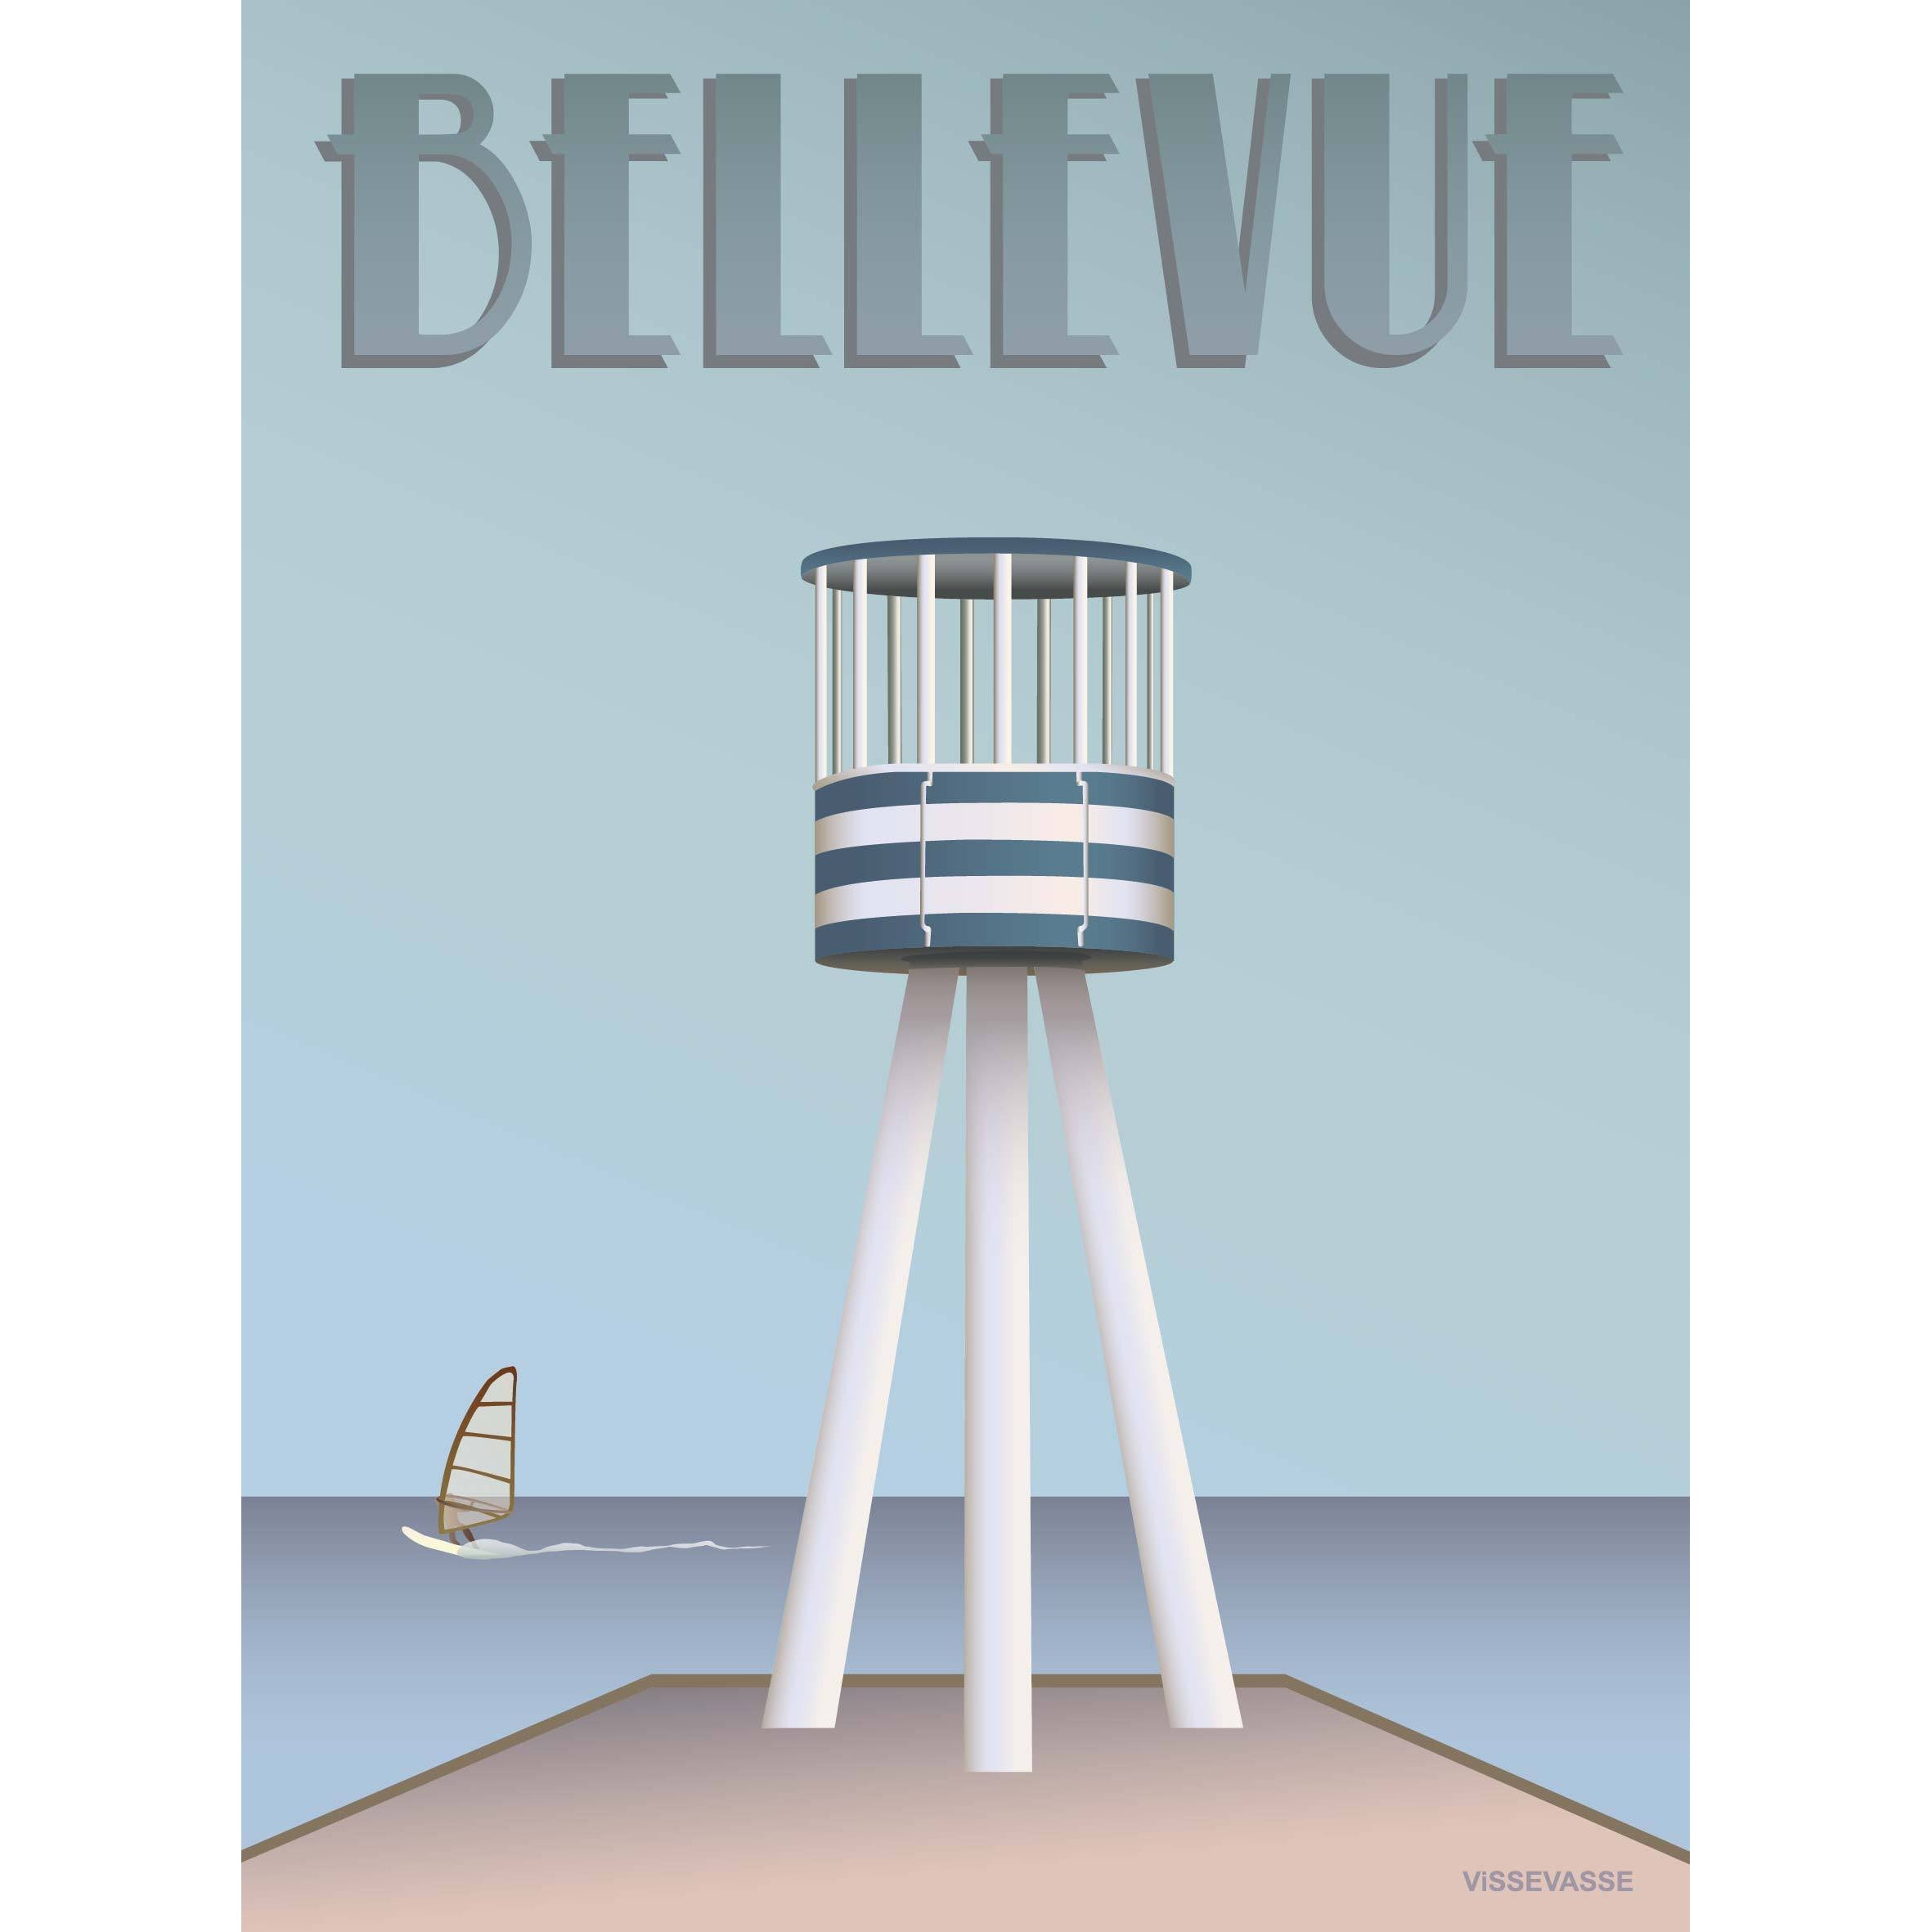 Vissevasse Bellevue Lifeguard Tower Poster, 15 X21 Cm